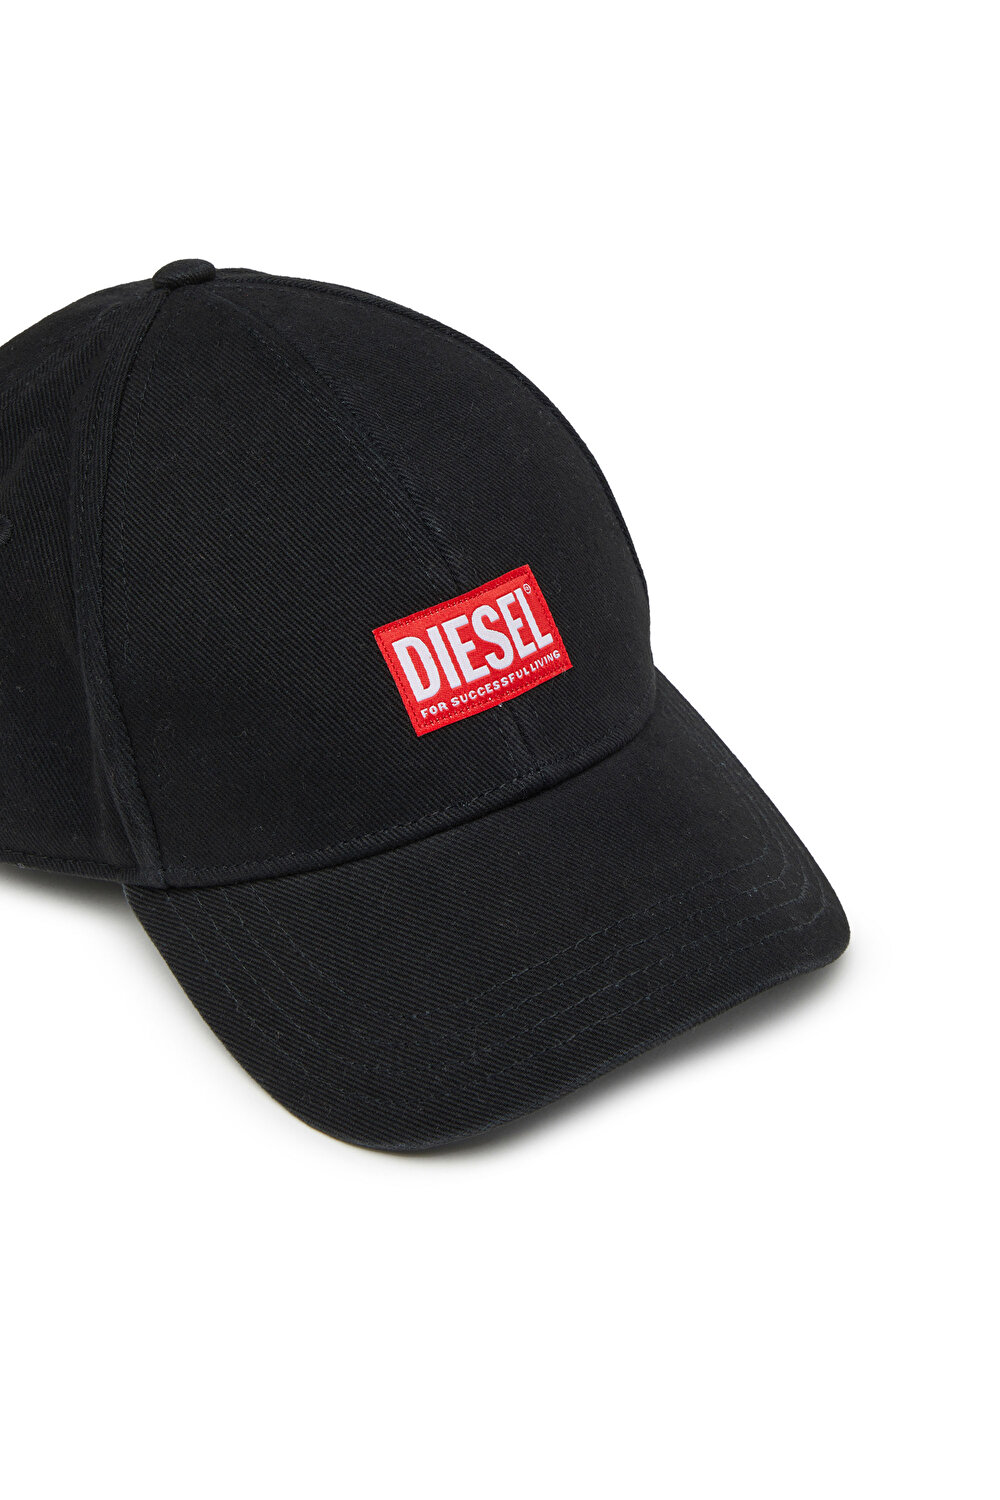 Diesel Erkek Logo Detaylı Siyah Şapka 